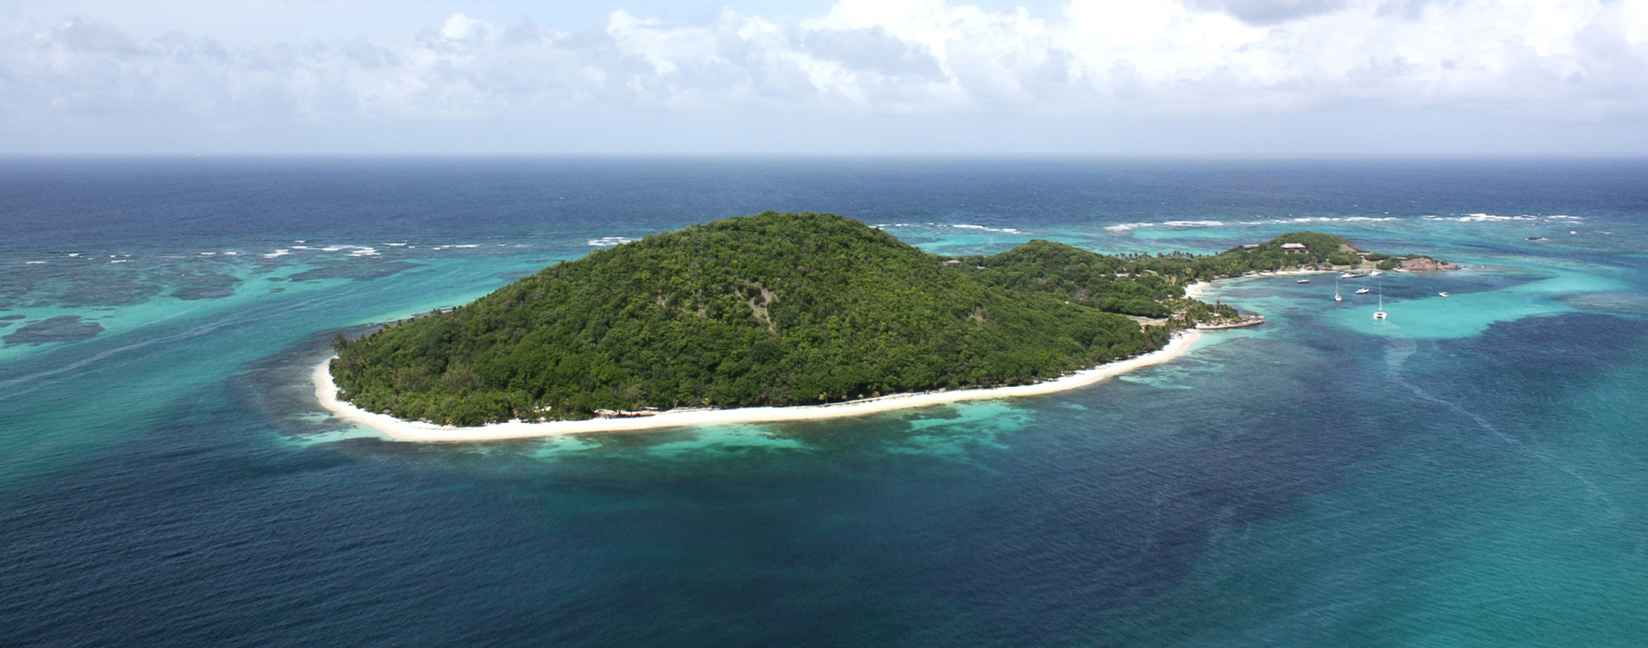 Private Island Resorts